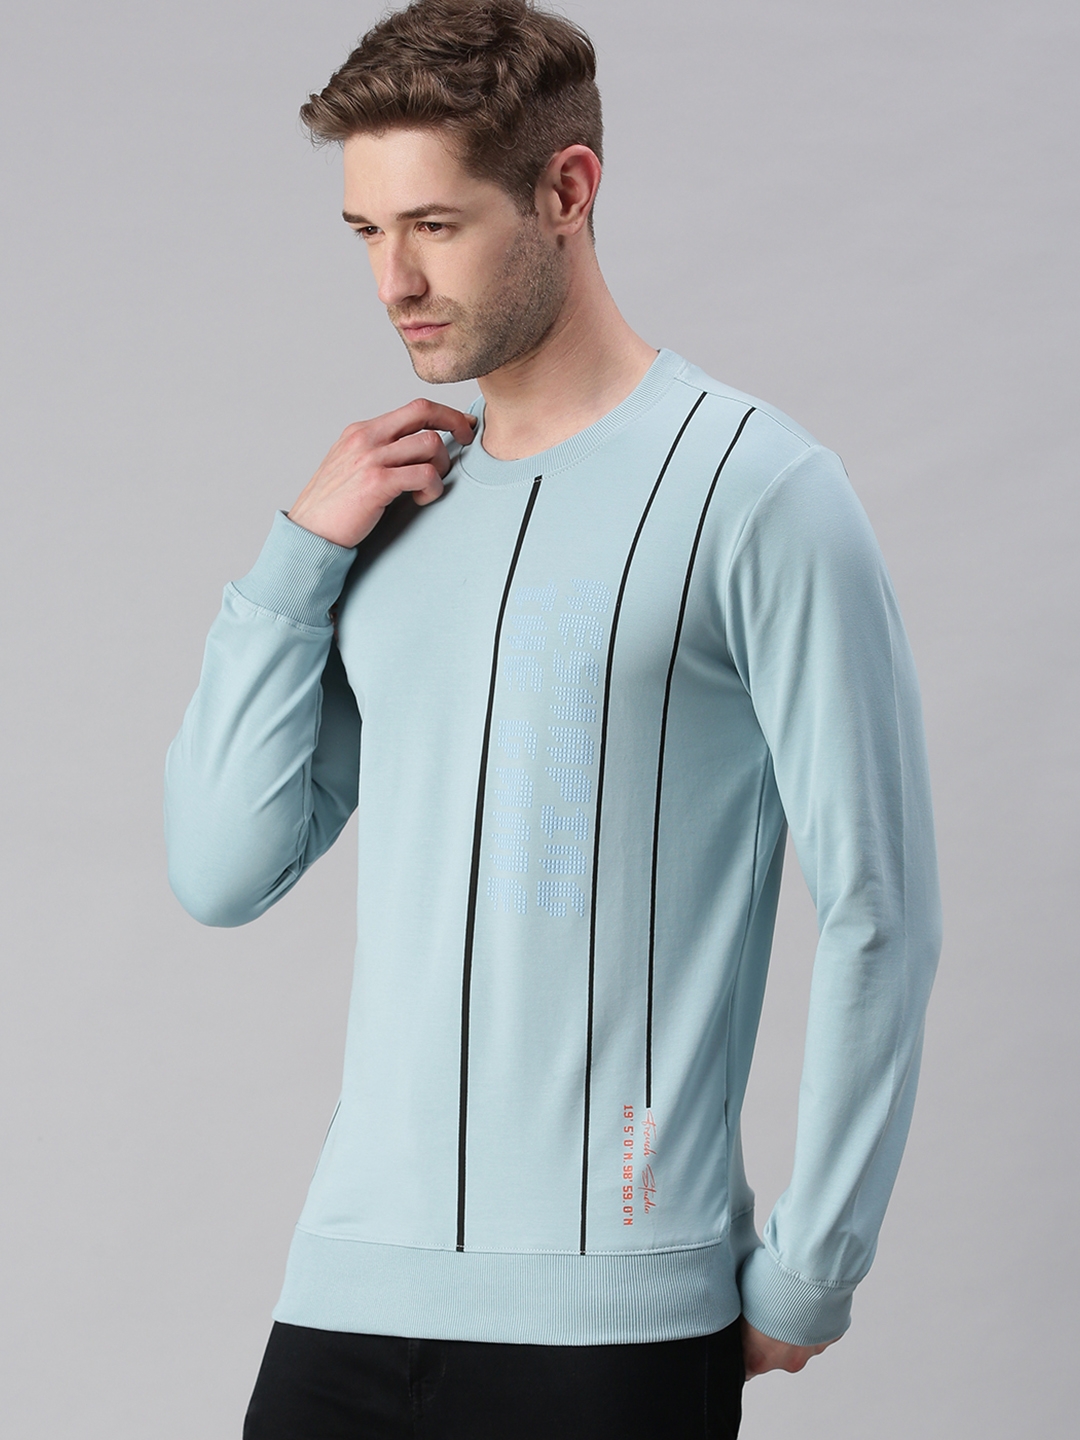 Men's Blue Cotton Blend Printed Sweatshirts